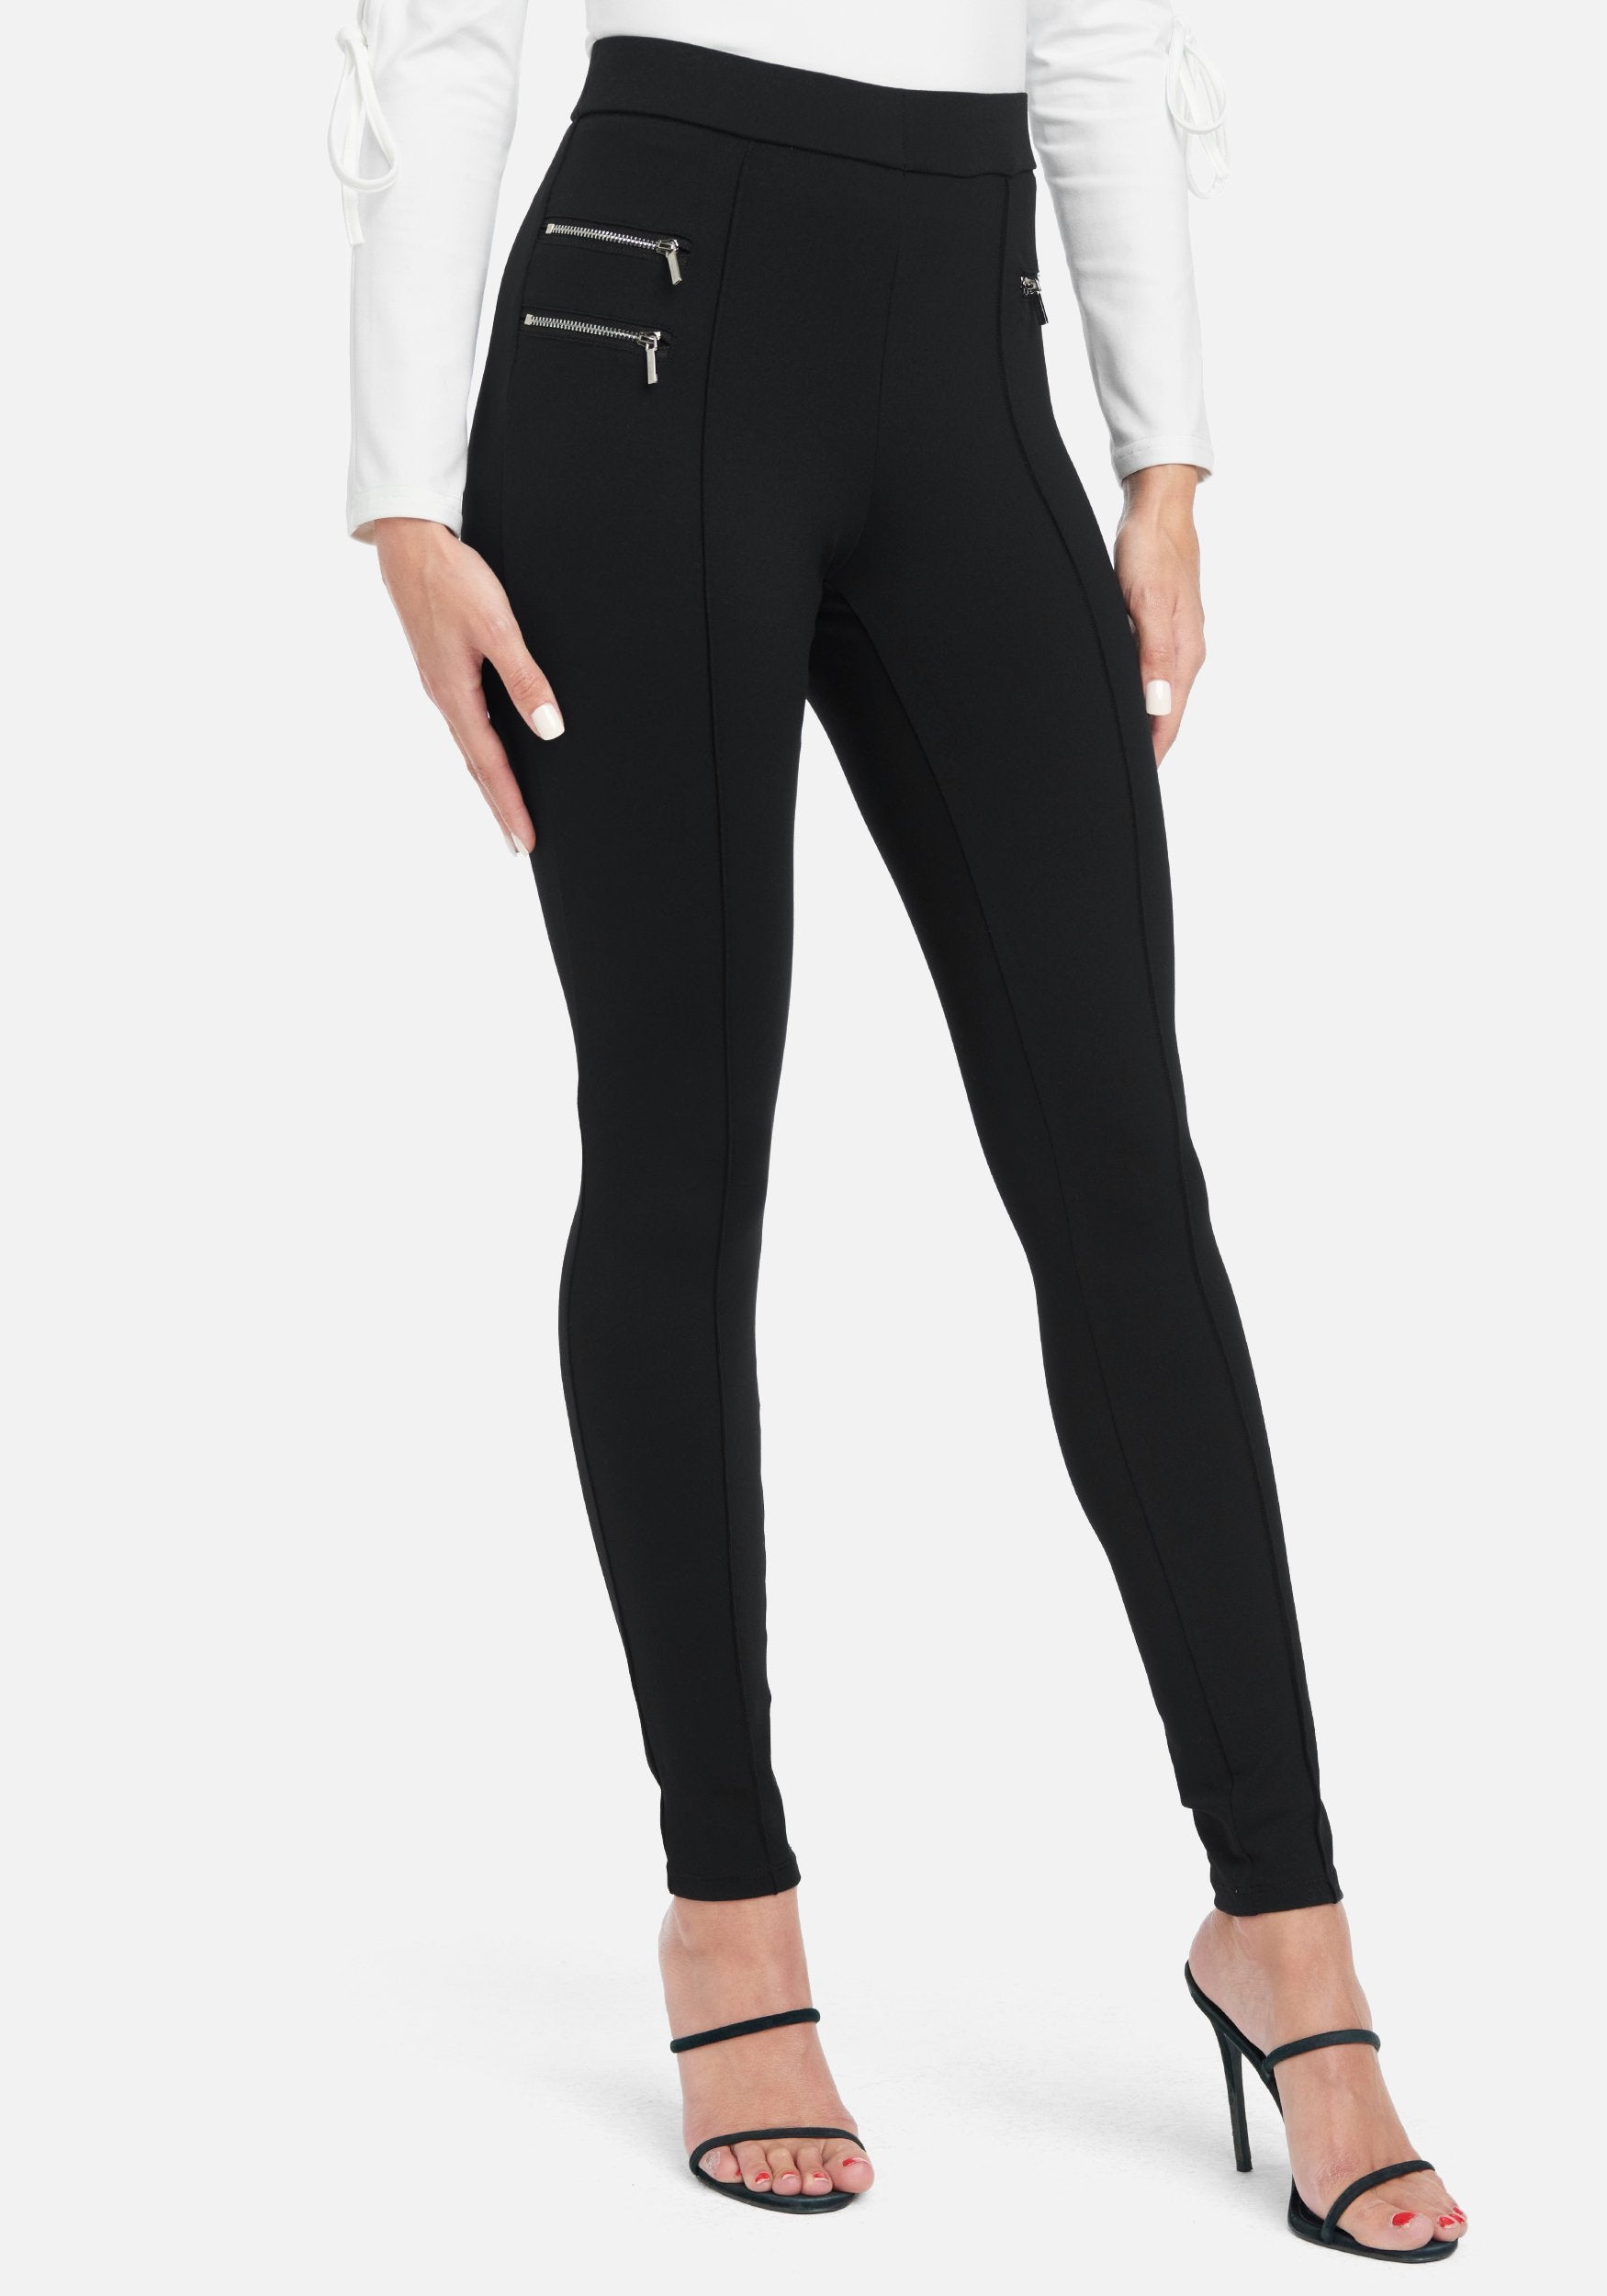 Bebe Women's Zipper Knit Legging, Size XL in Black Nylon/Spandex